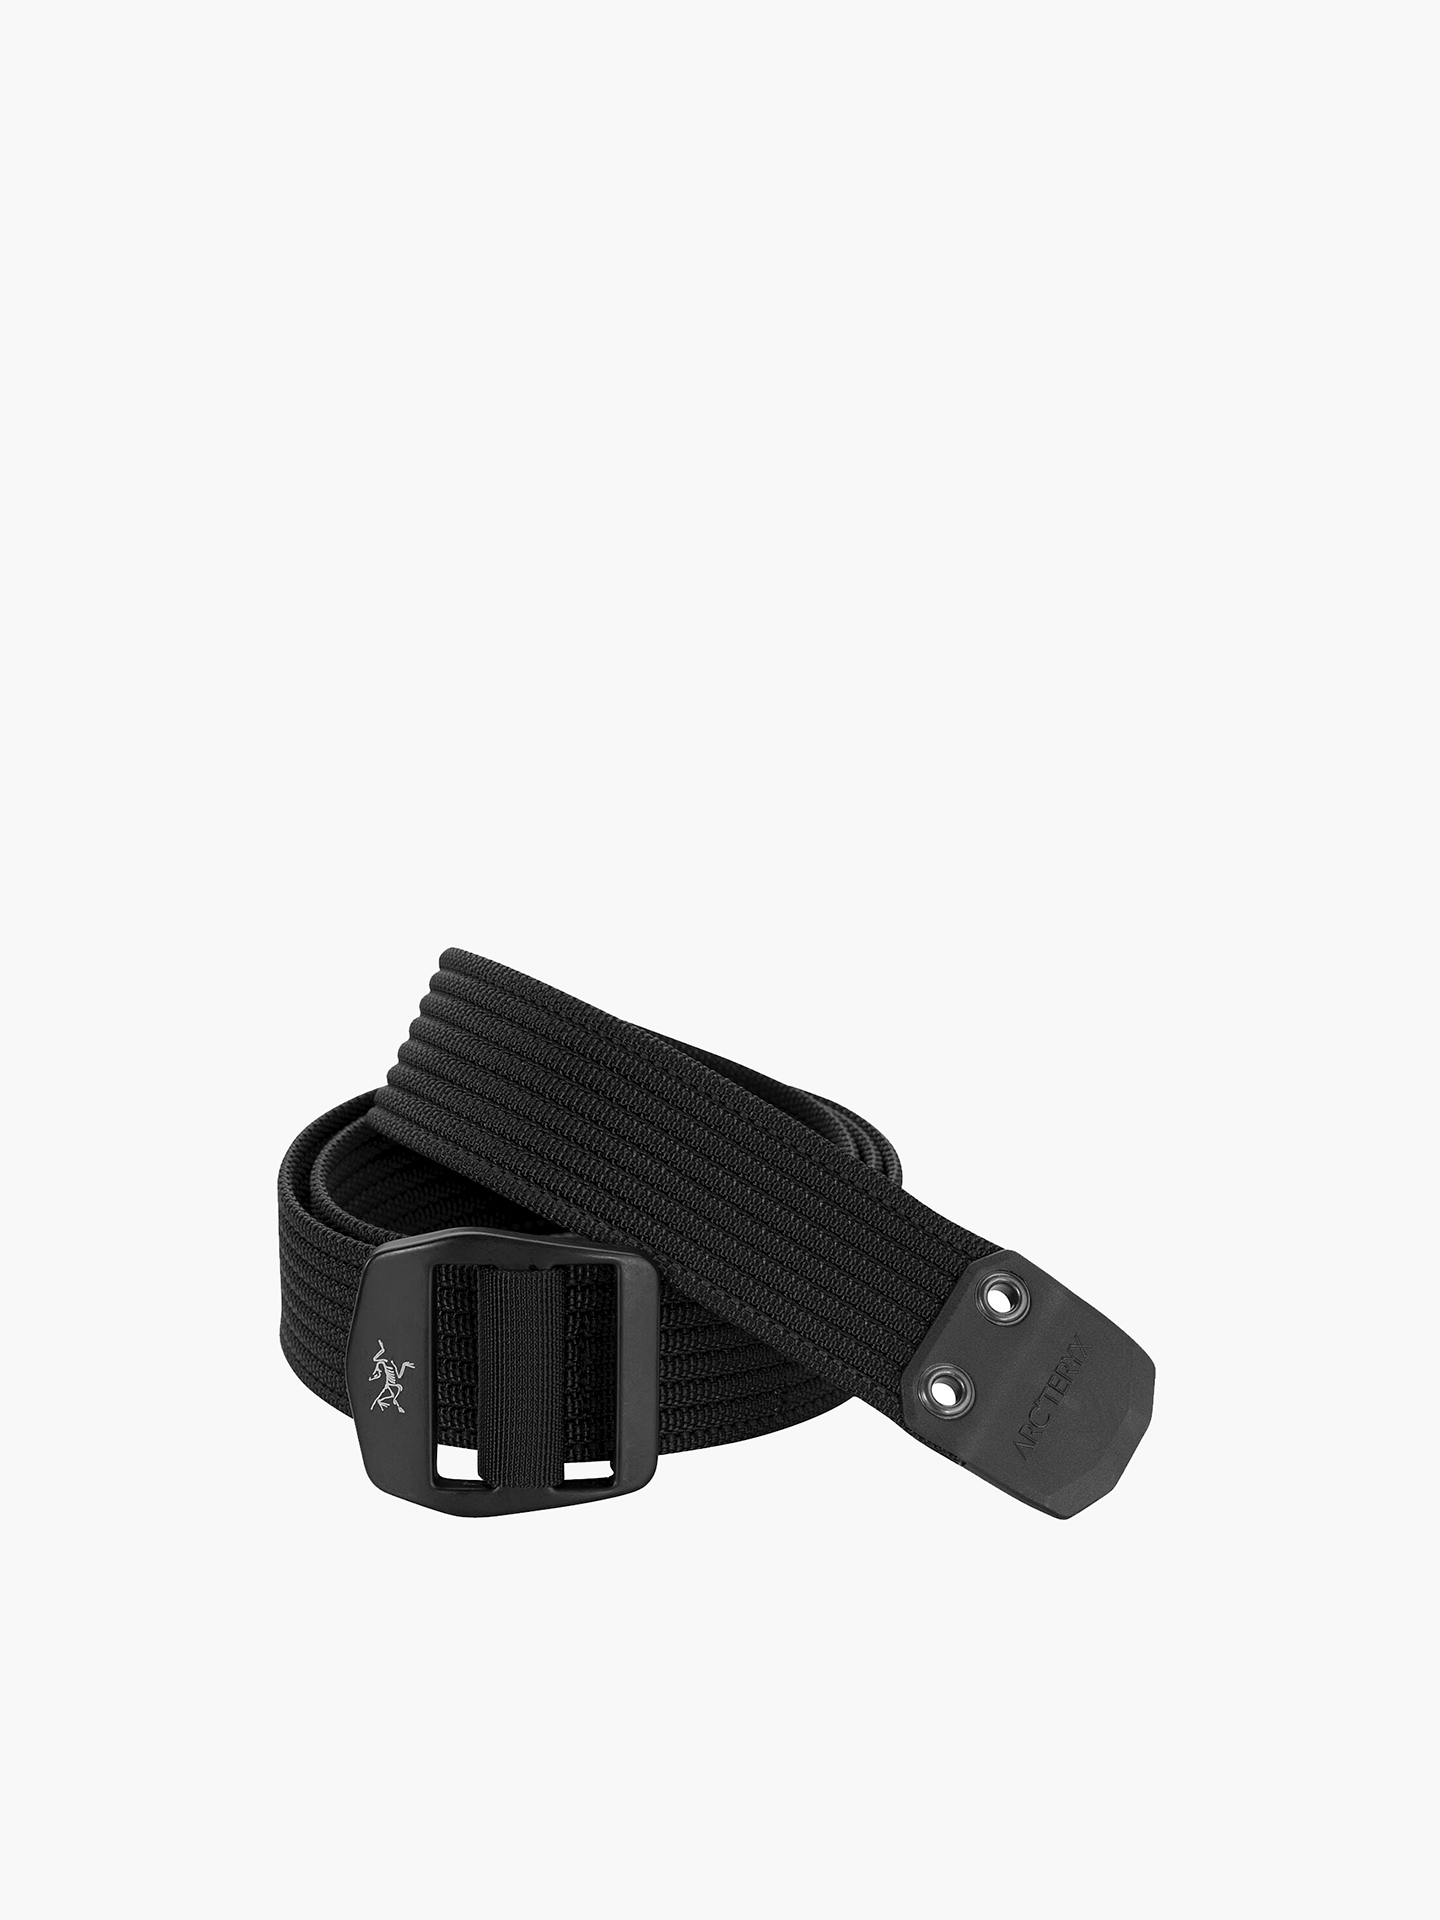 L06870600/L Ремень Arcteryx Conveyor Belt Black/Black, L L06870600/L, размер L